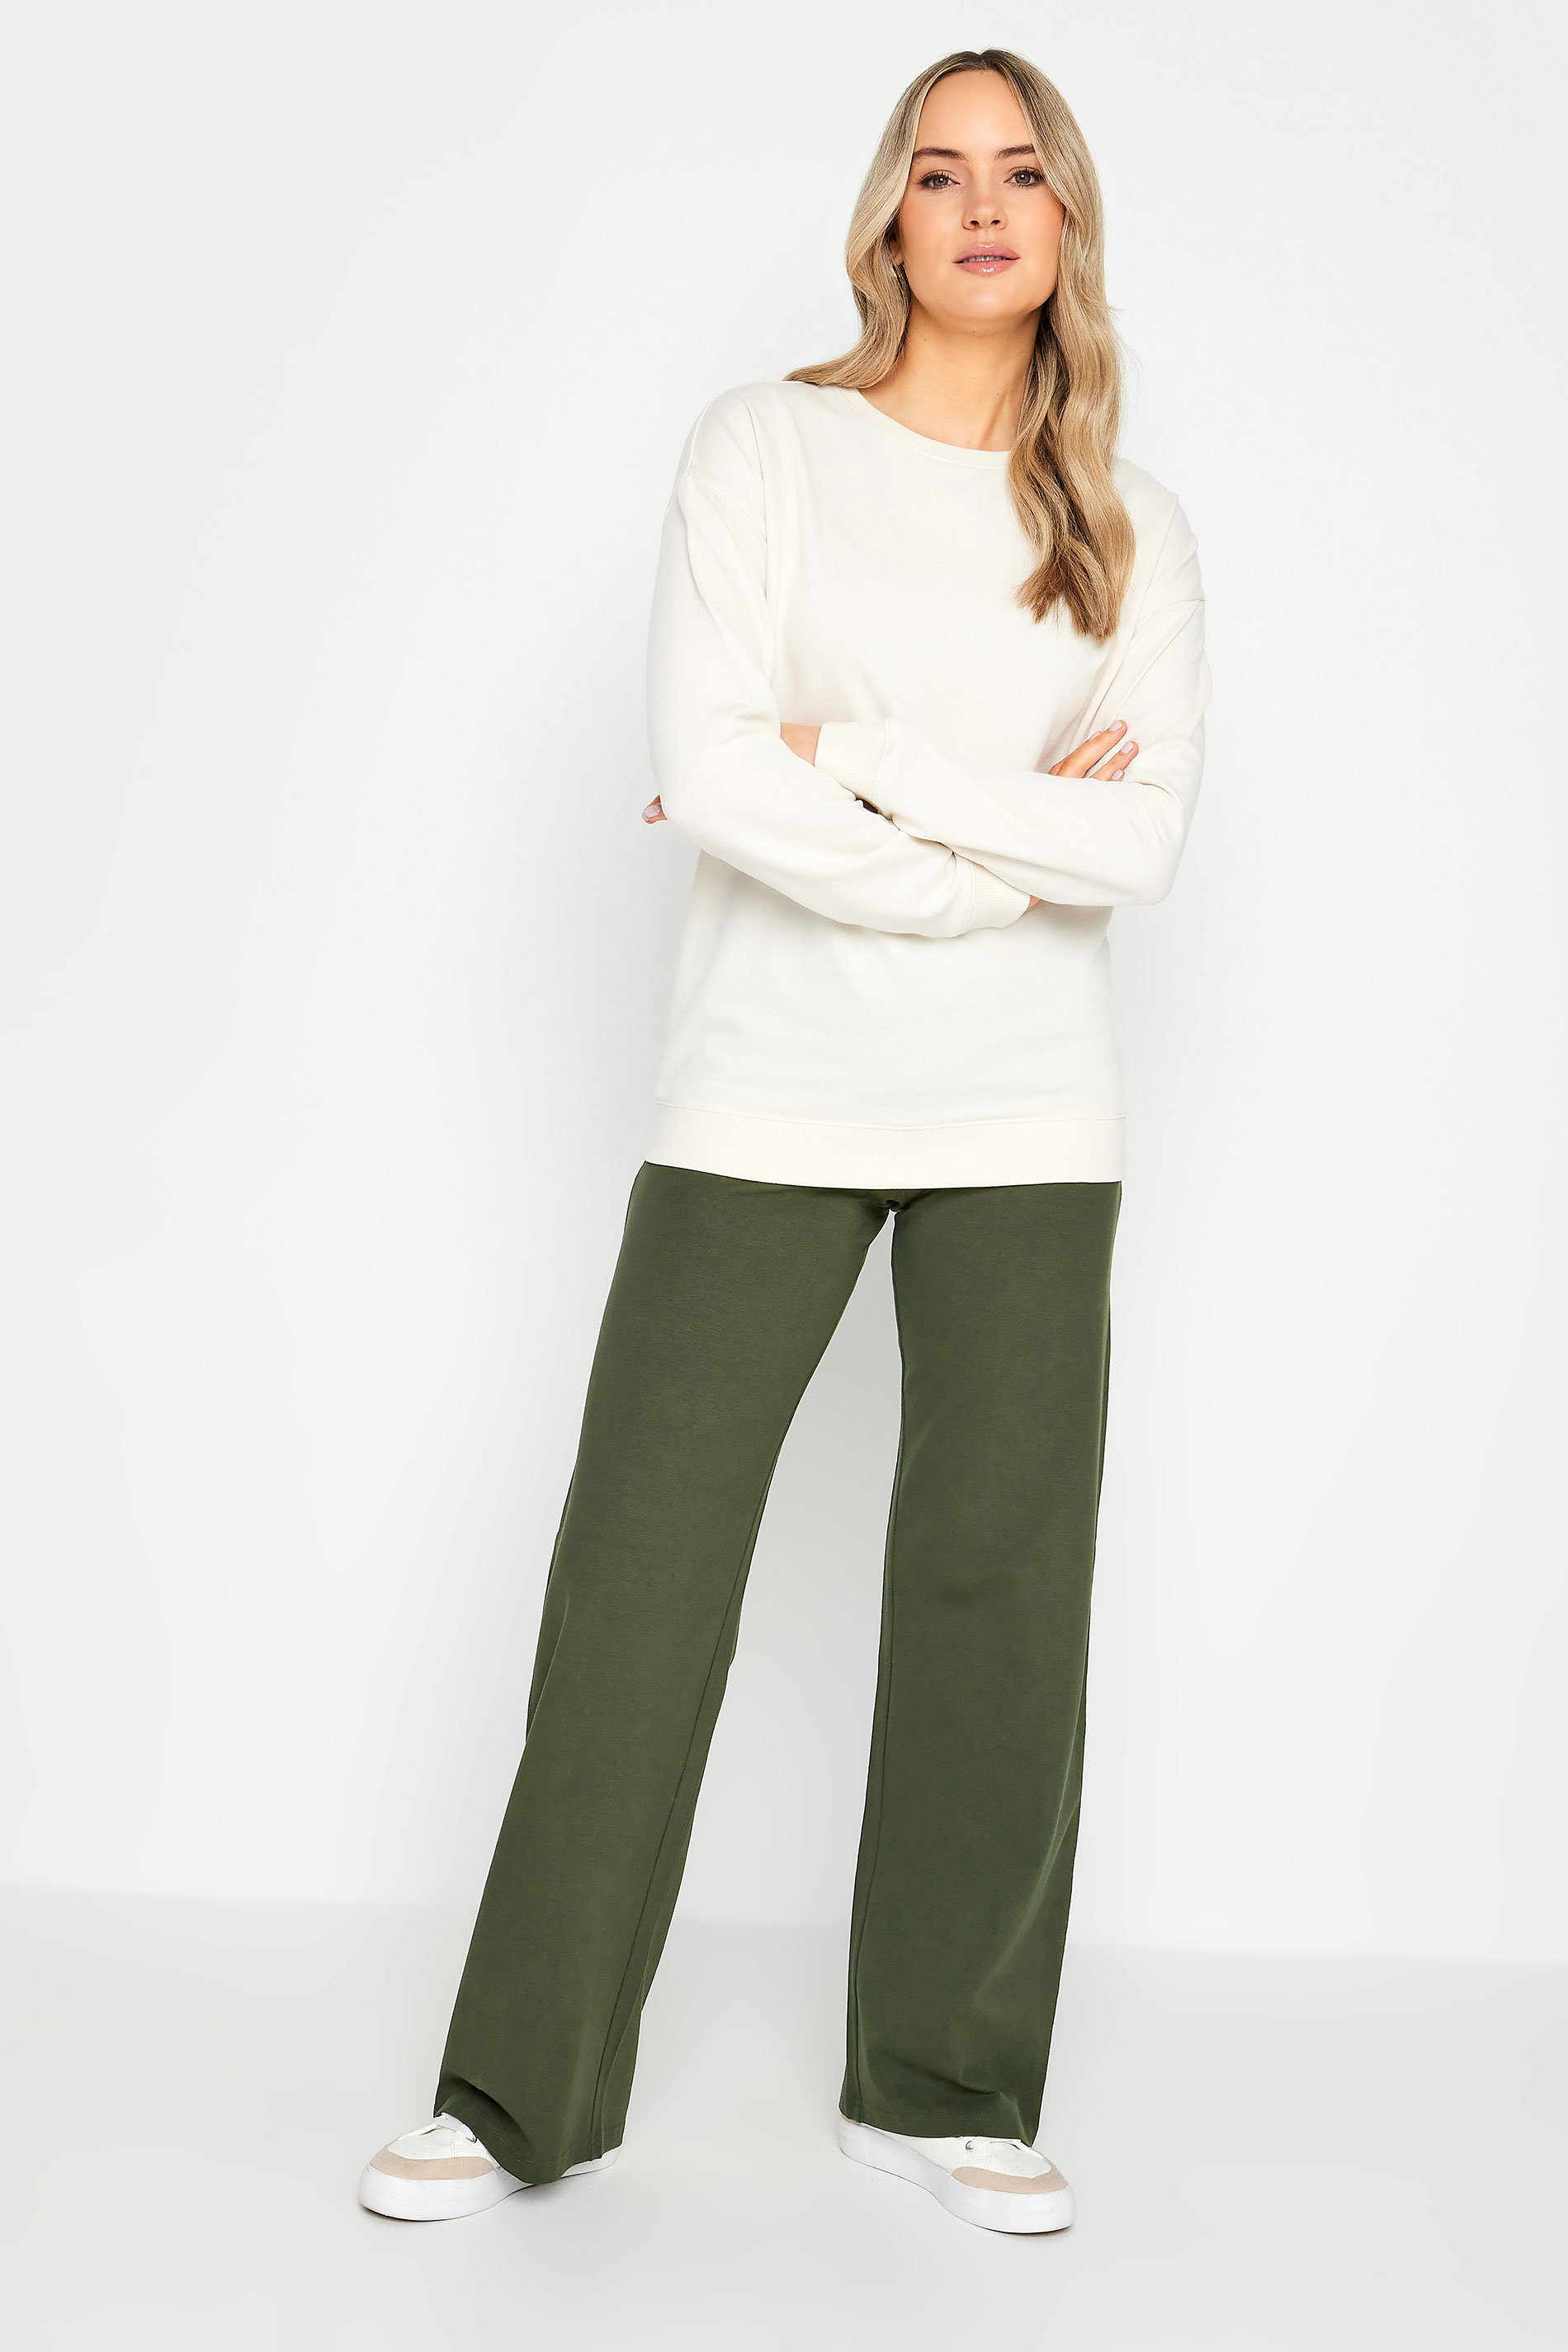 LTS Tall Womens Khaki Green Wide Leg Yoga Pants | Long Tall Sally 1